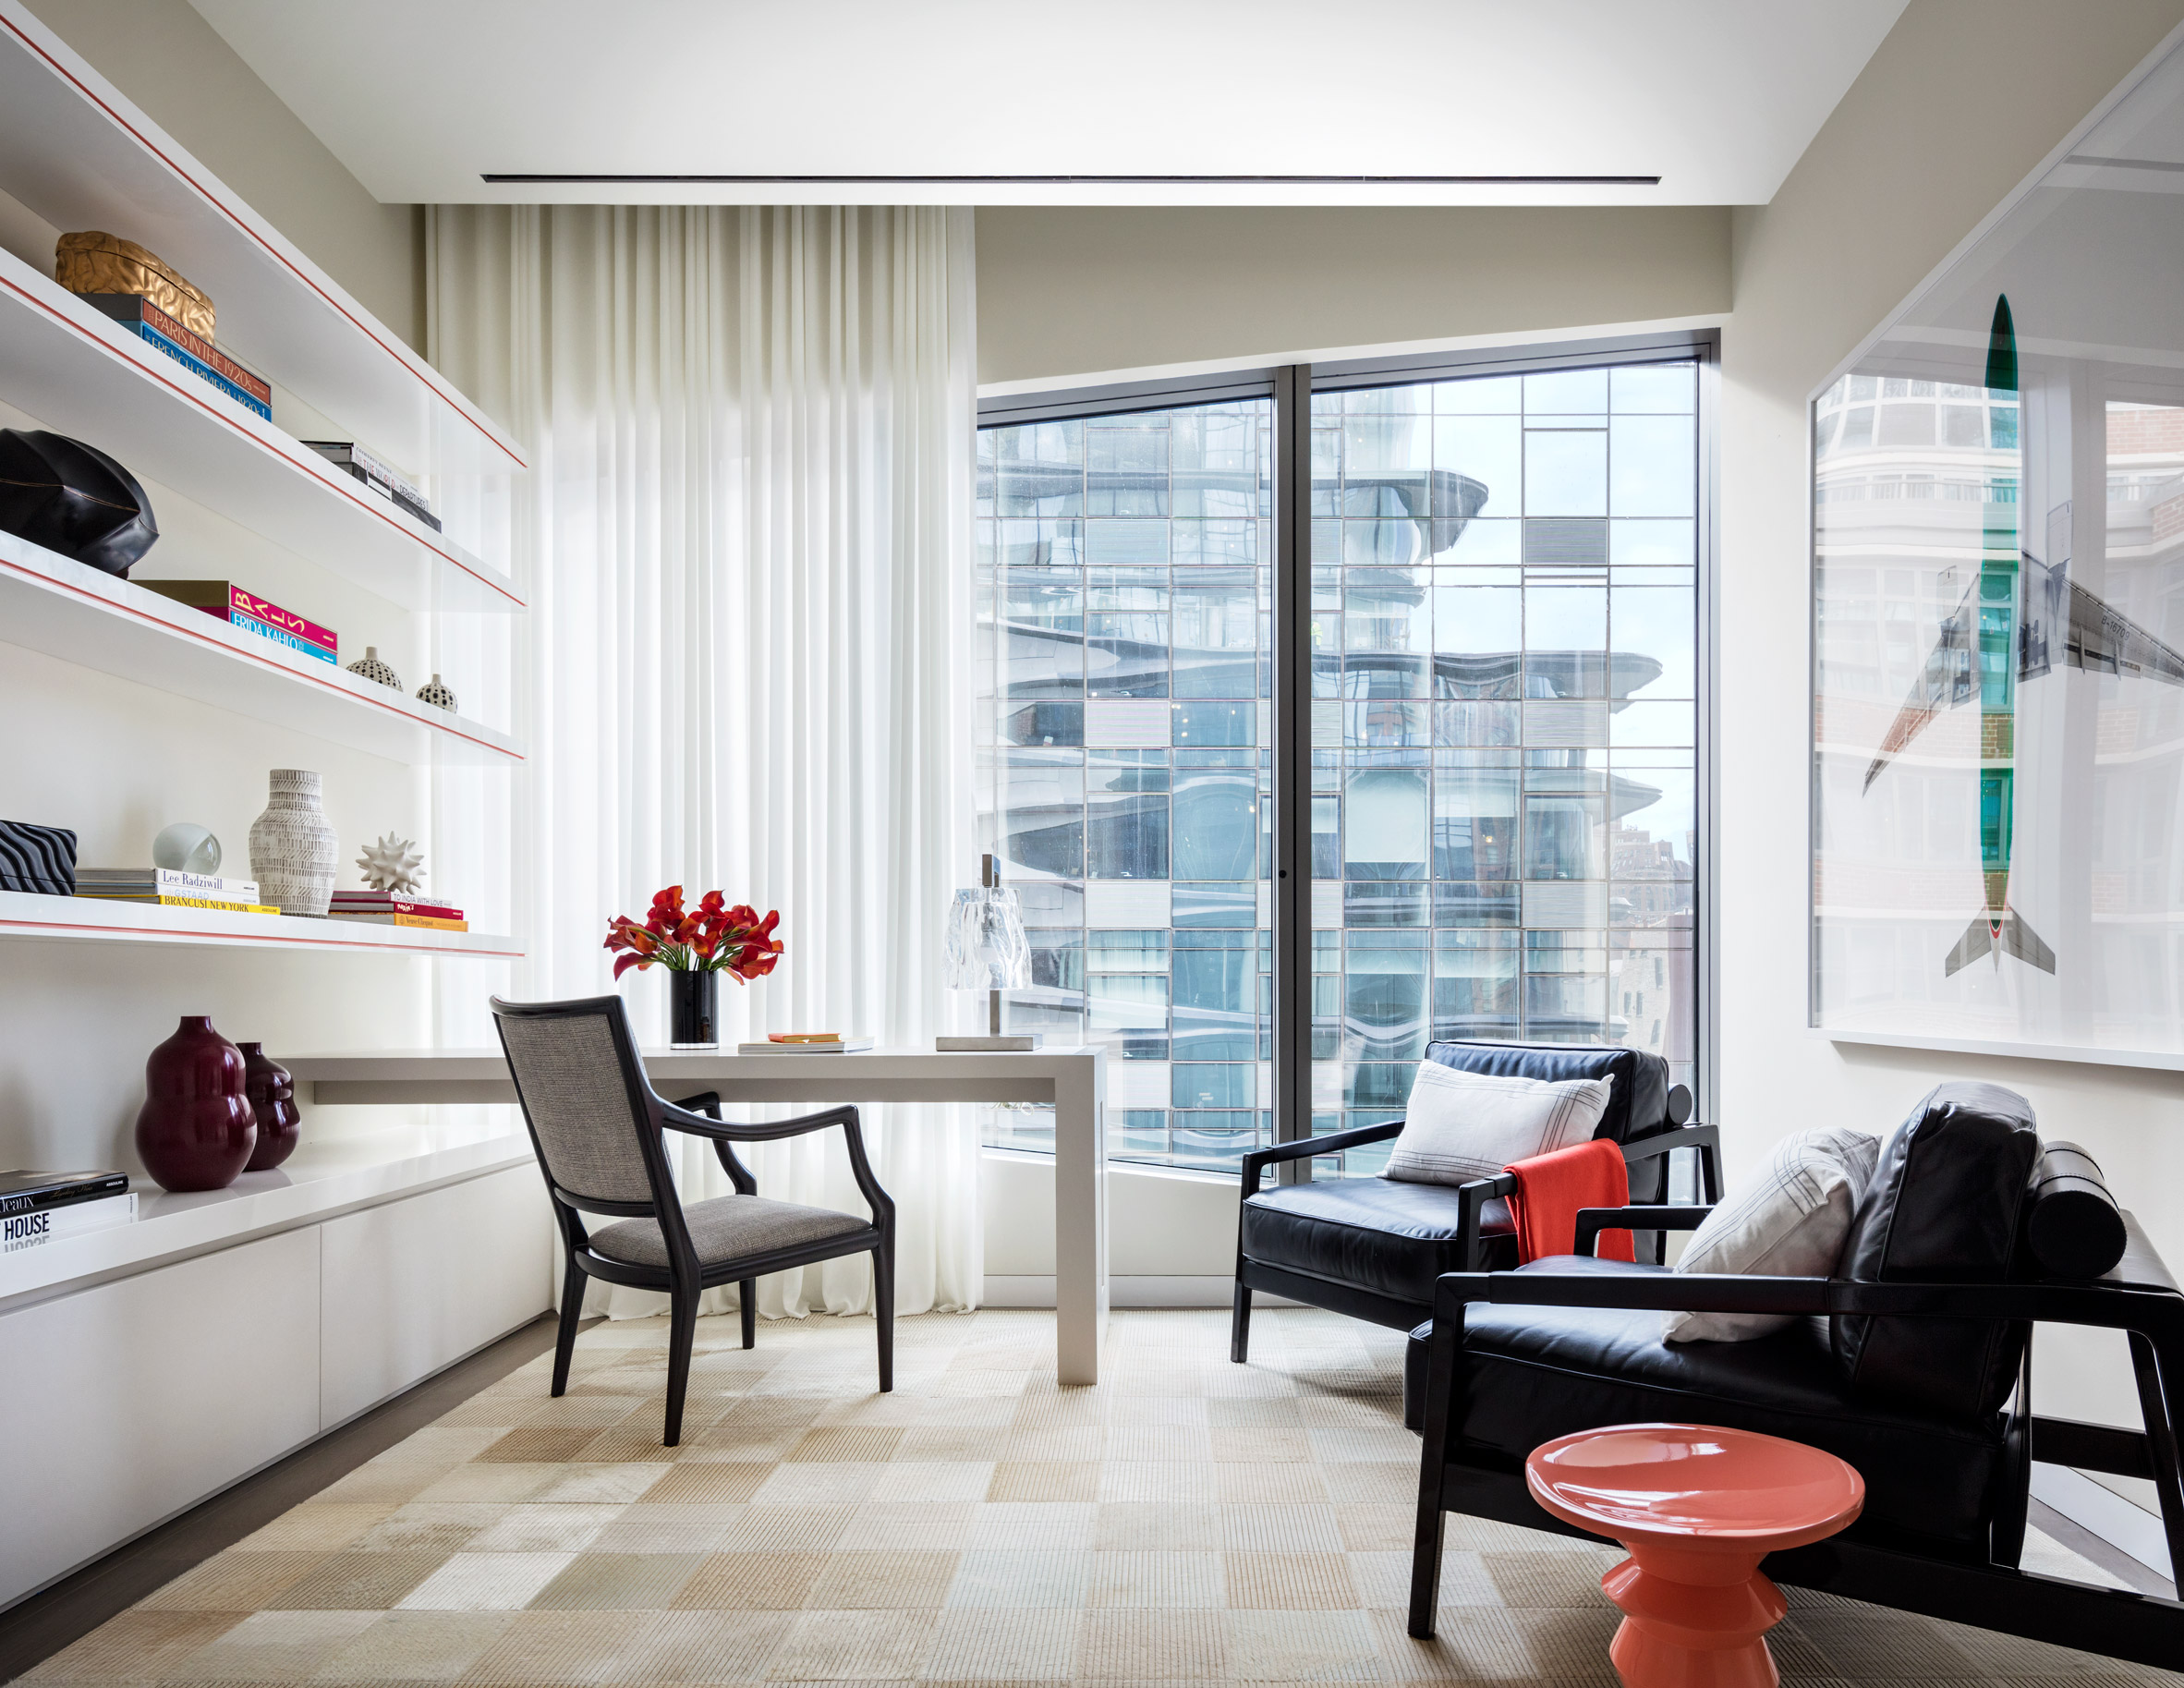 Model apartments offer a taste of life inside Zaha Hadid's New York condo building